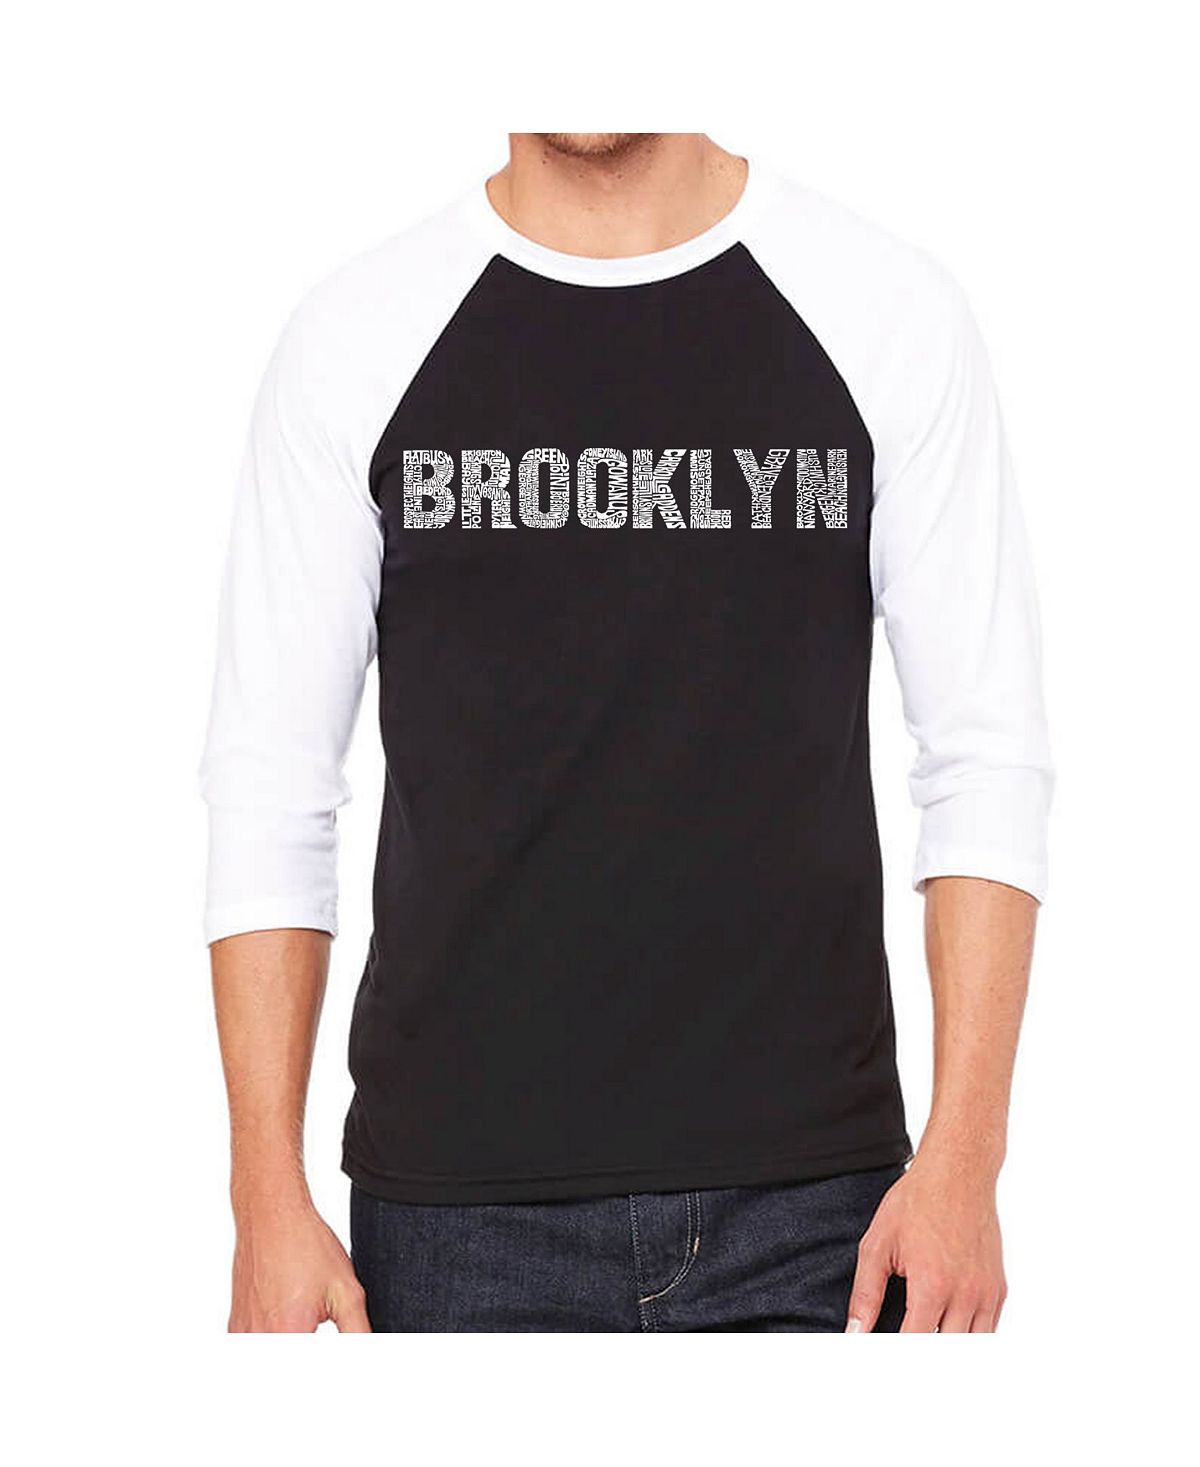 Мужская футболка реглан с надписью brooklyn neighborhoods LA Pop Art, черный мужская футболка с надписью reglan и надписью neighborhoods in new york city la pop art черный